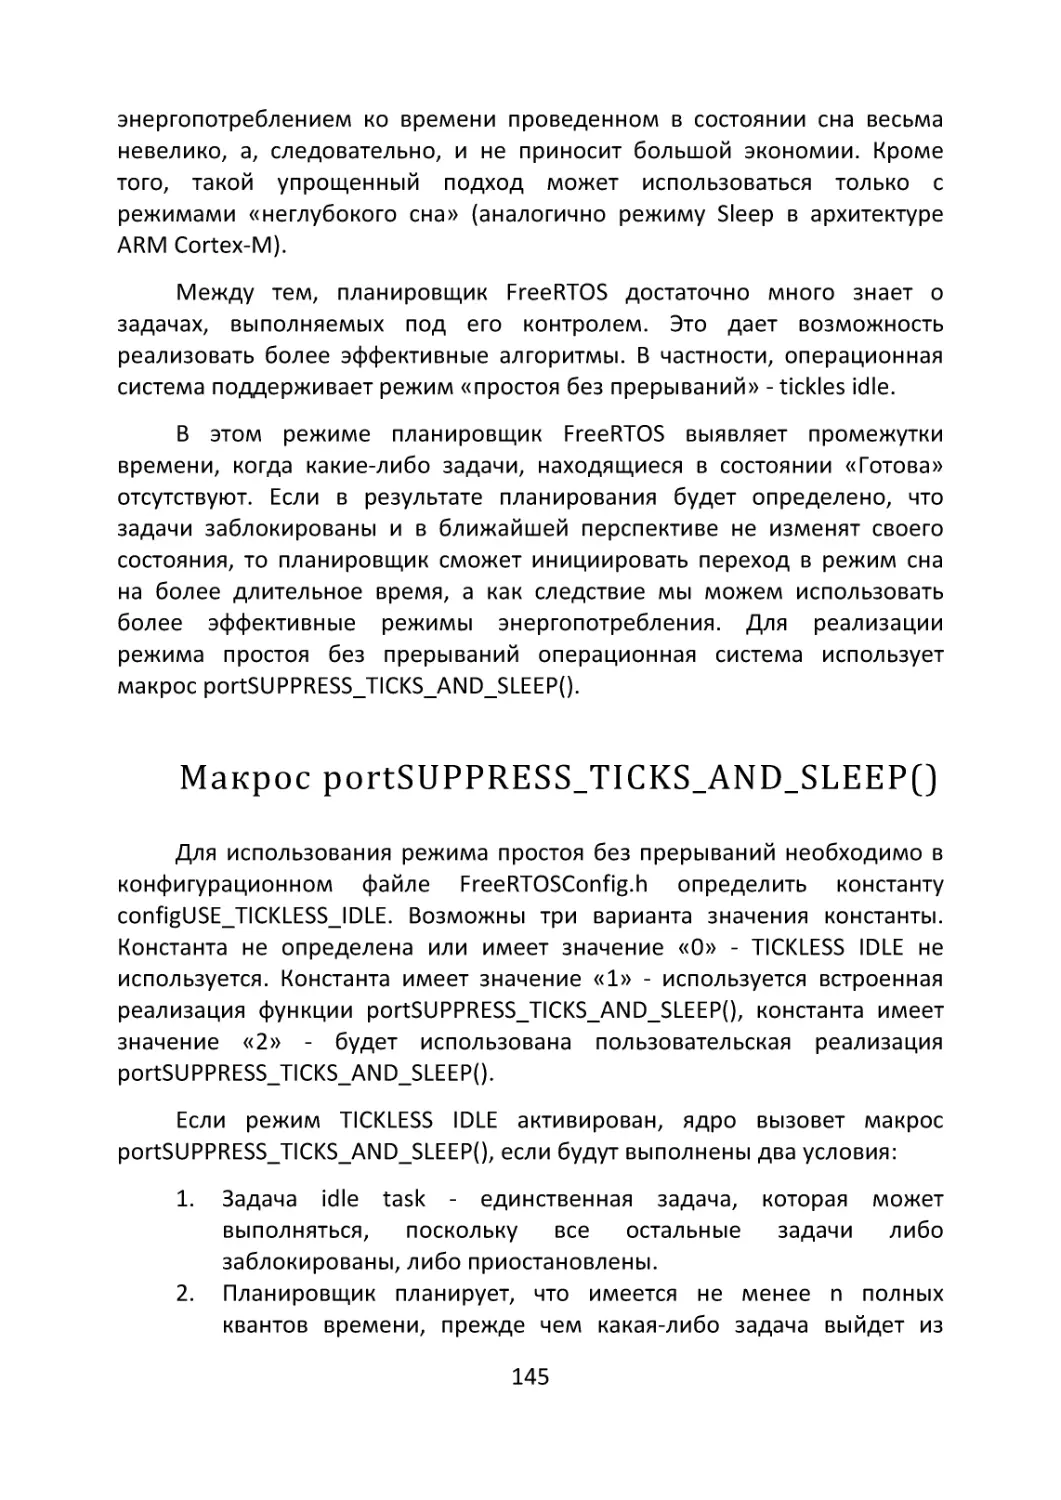 Макрос portSUPPRESS_TICKS_AND_SLEEP()